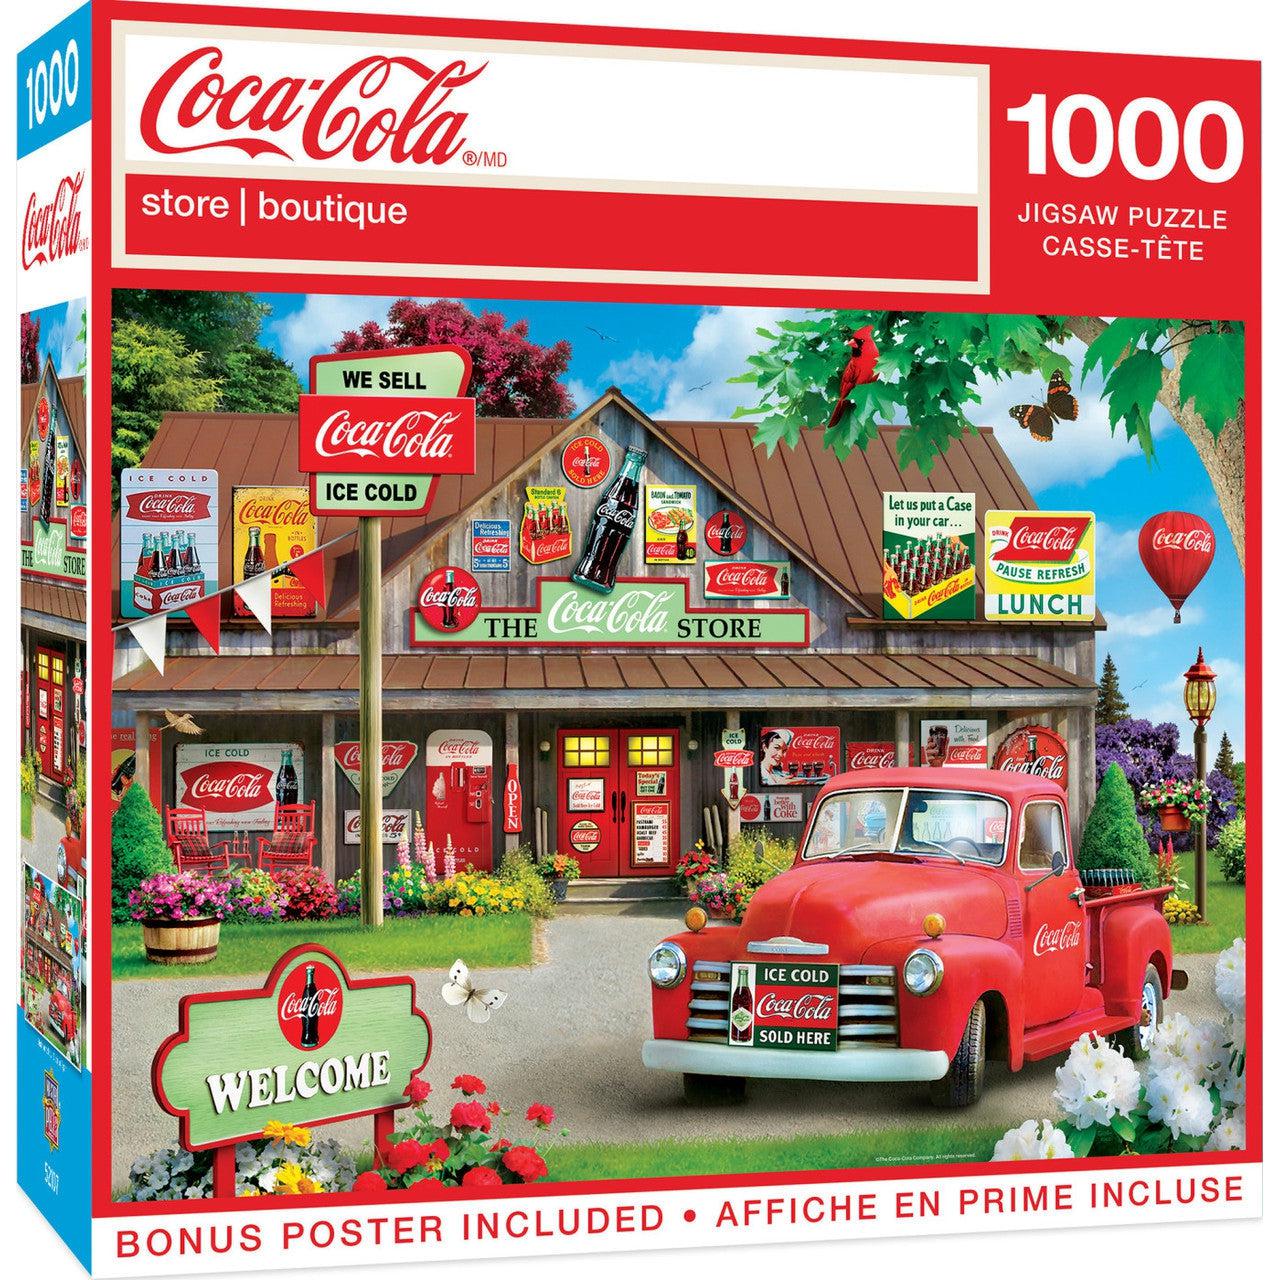 Coca-Cola - The Coca-Cola Store - 1000 Piece Puzzle